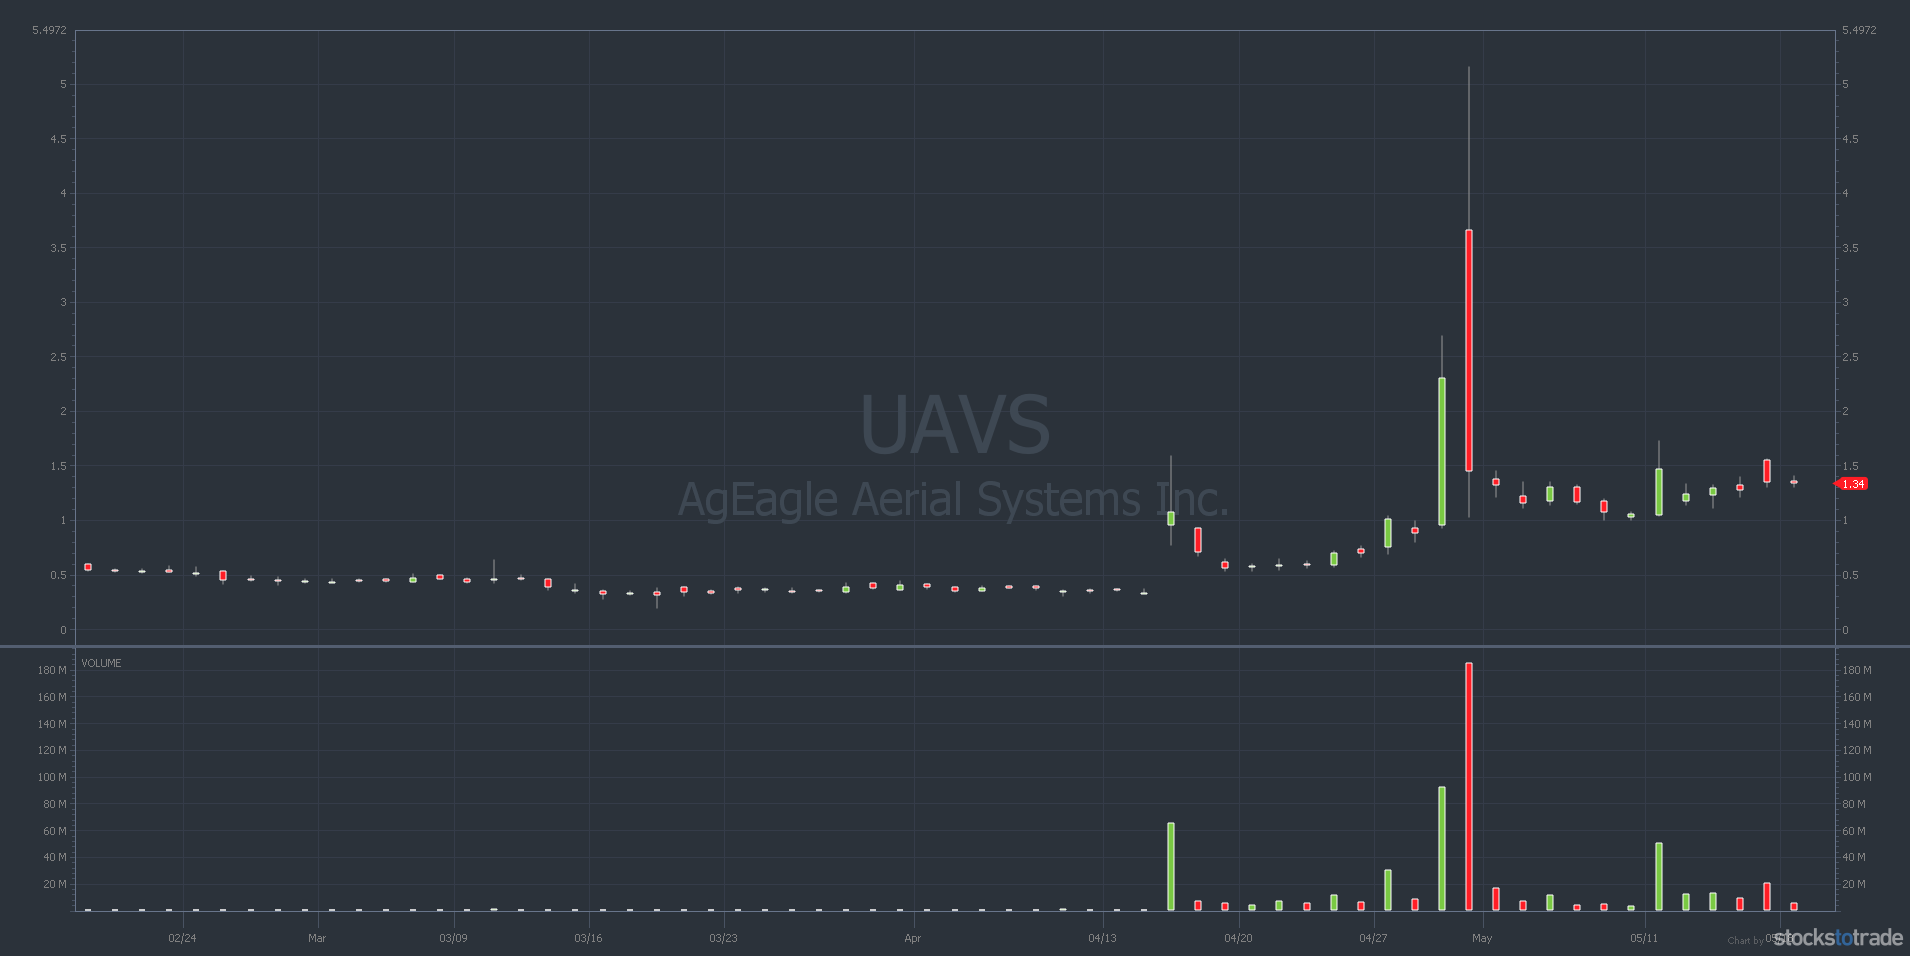 UAVS stock chart